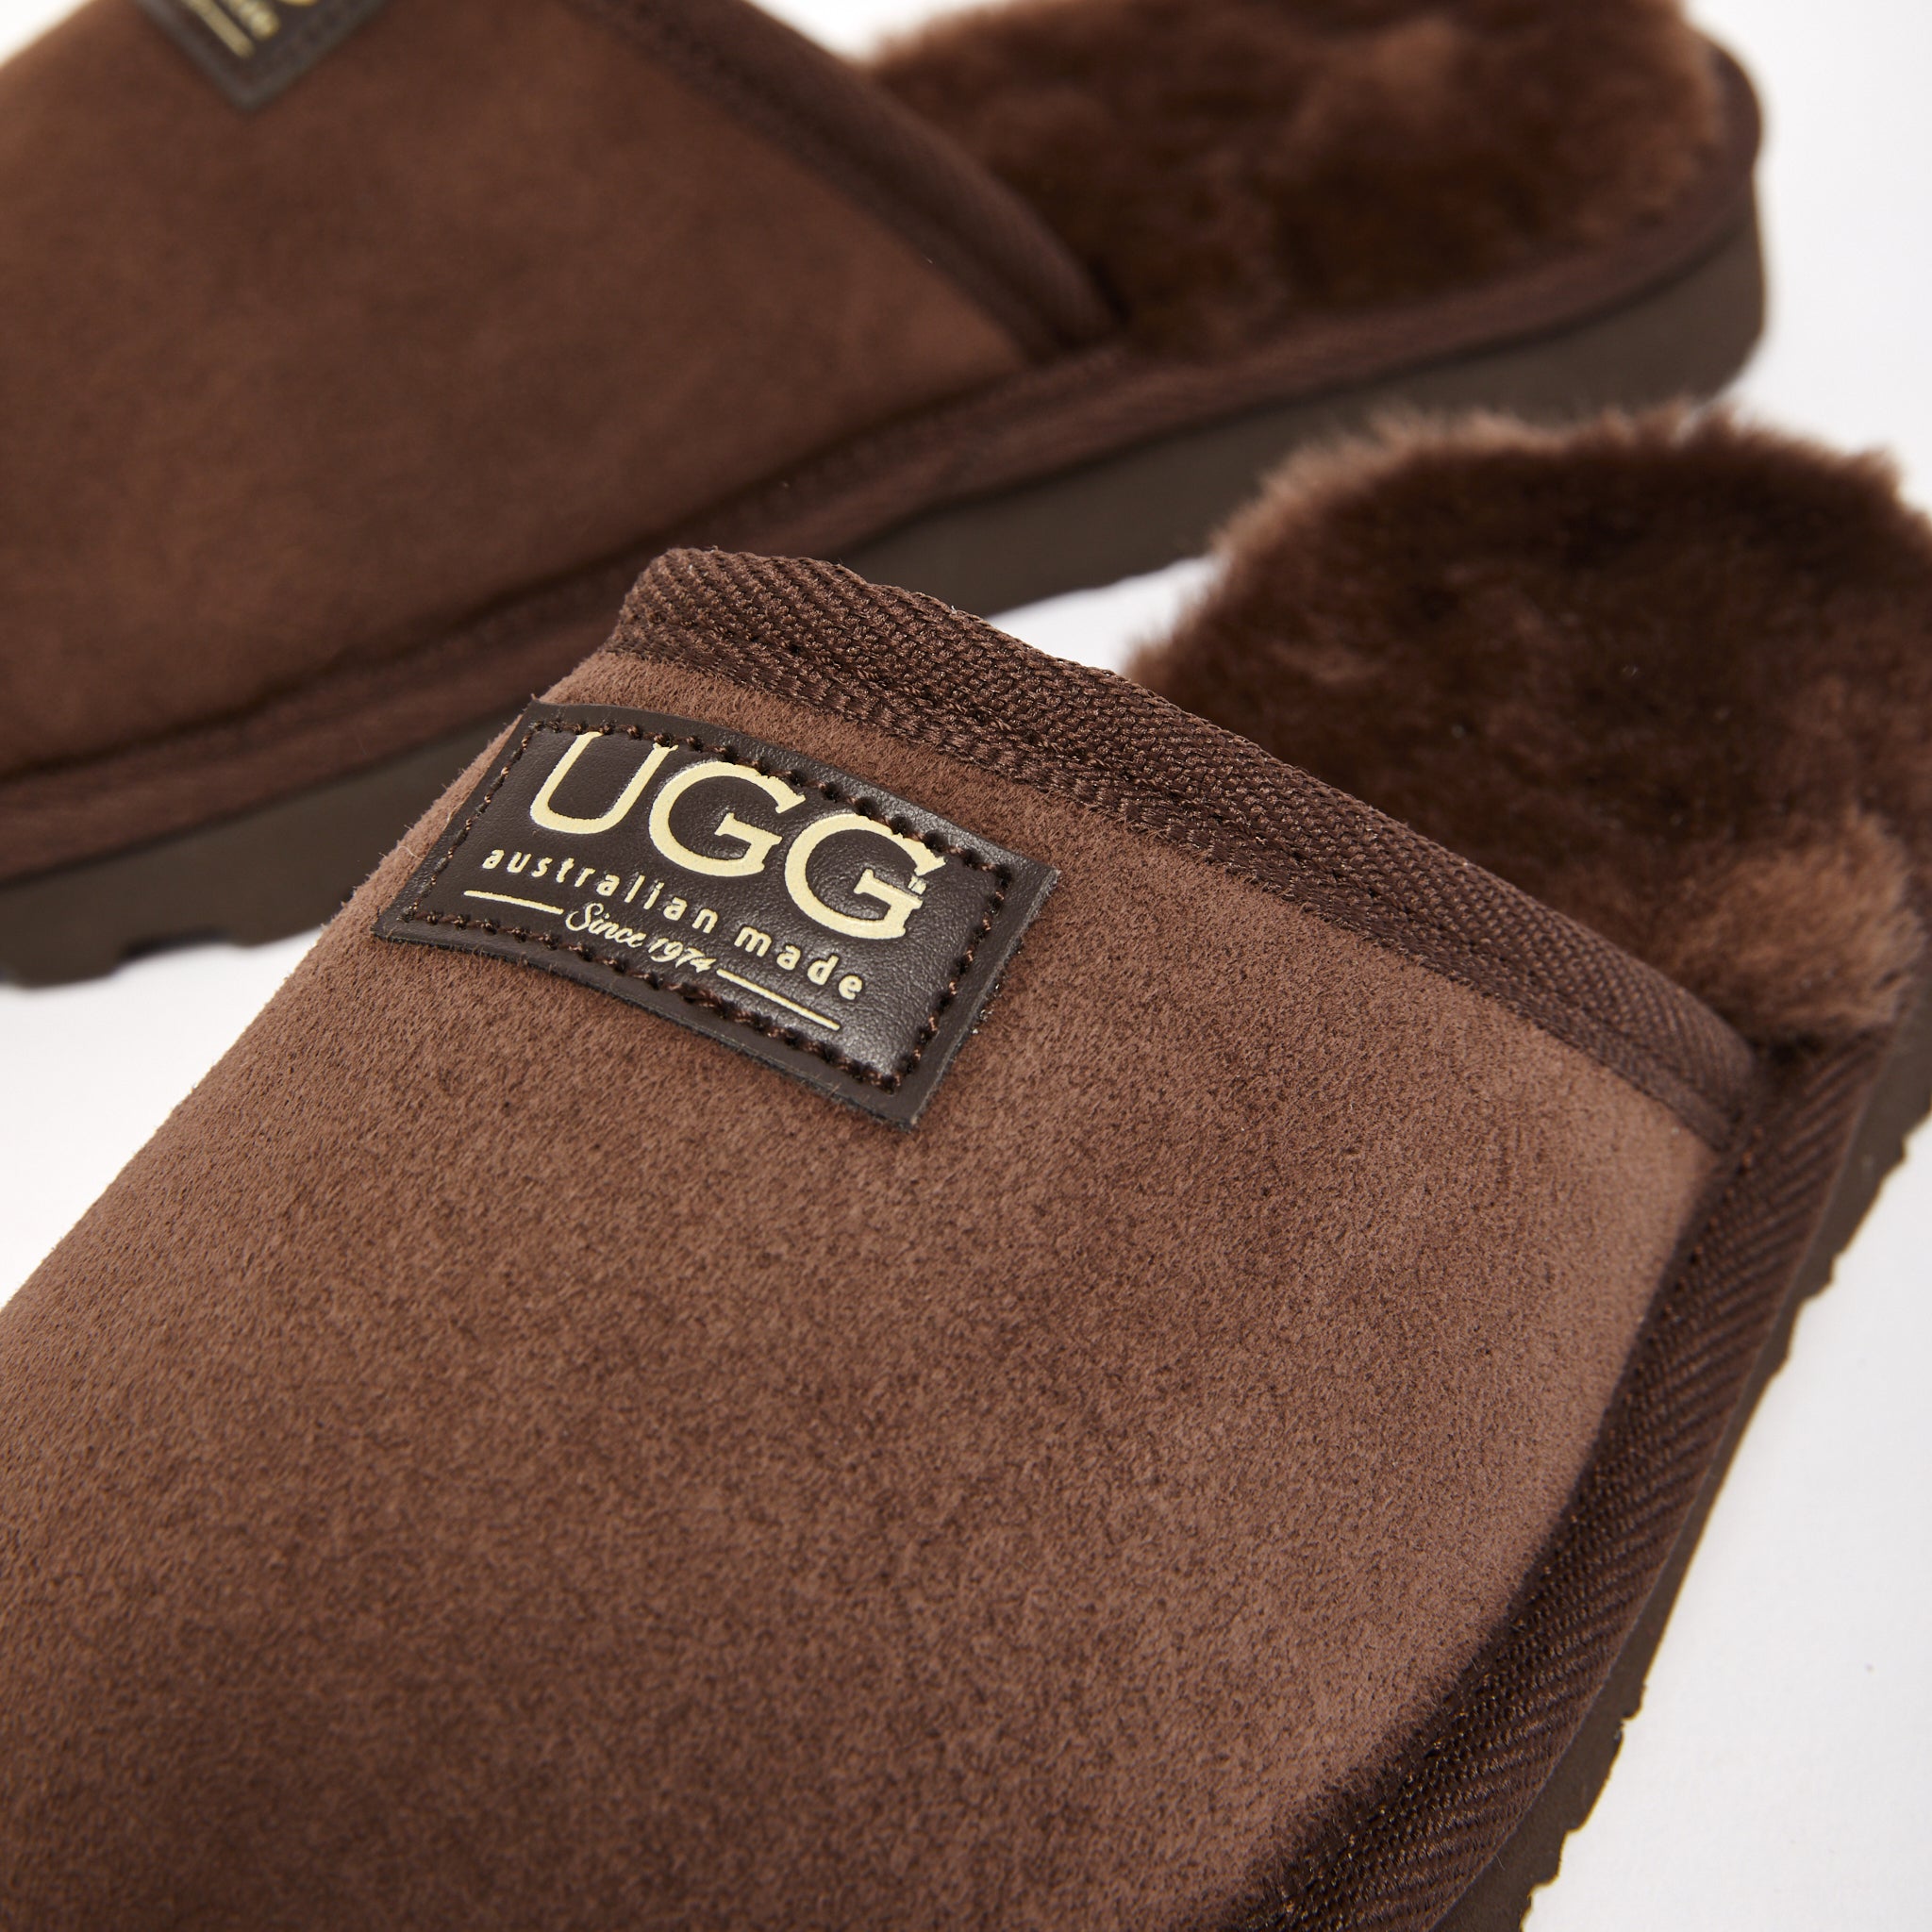 Ugg Slippers / Original Ugg Australia Classic – Original UGG